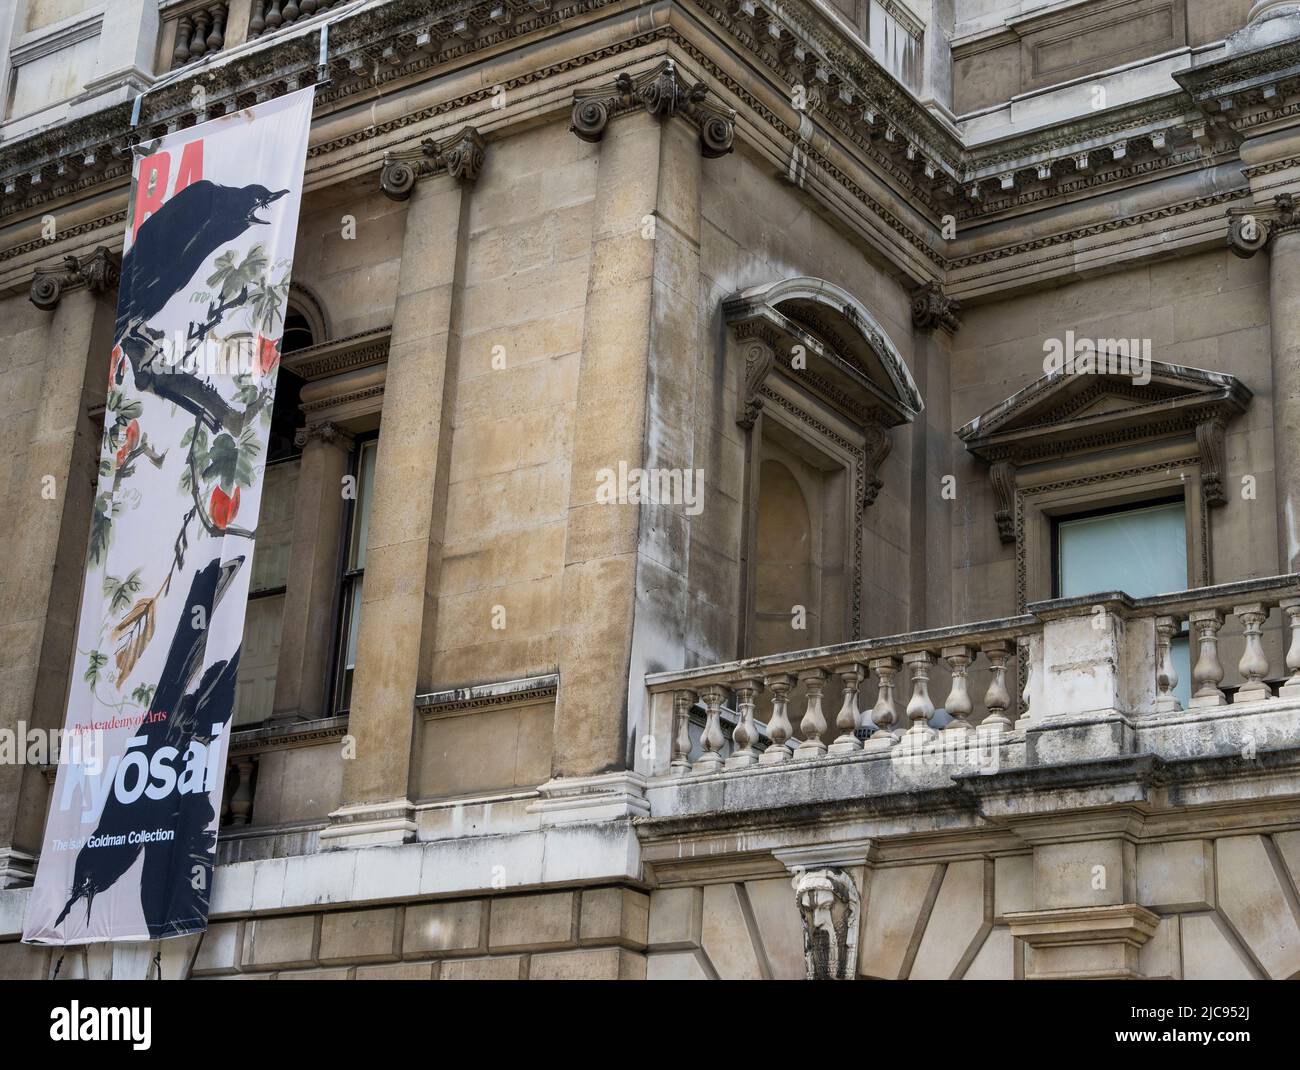 Banner de exposición de Koysai en la Royal Academy of Arts, Londres, Inglaterra, Reino Unido, GB. Foto de stock